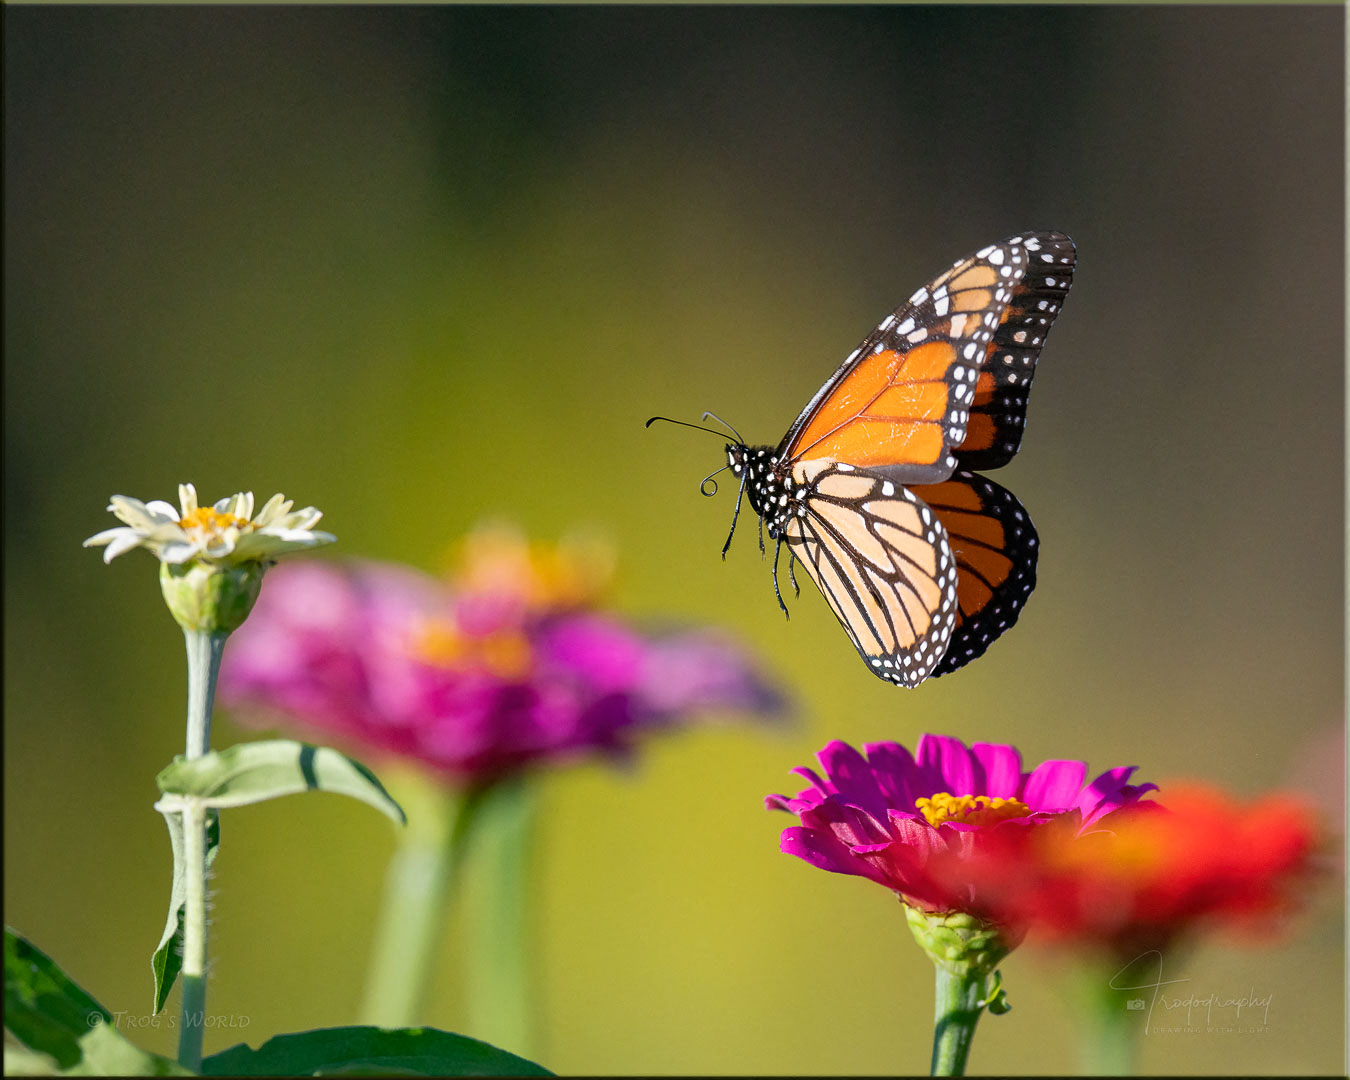 Monarch Butterfly in flight among the flowers